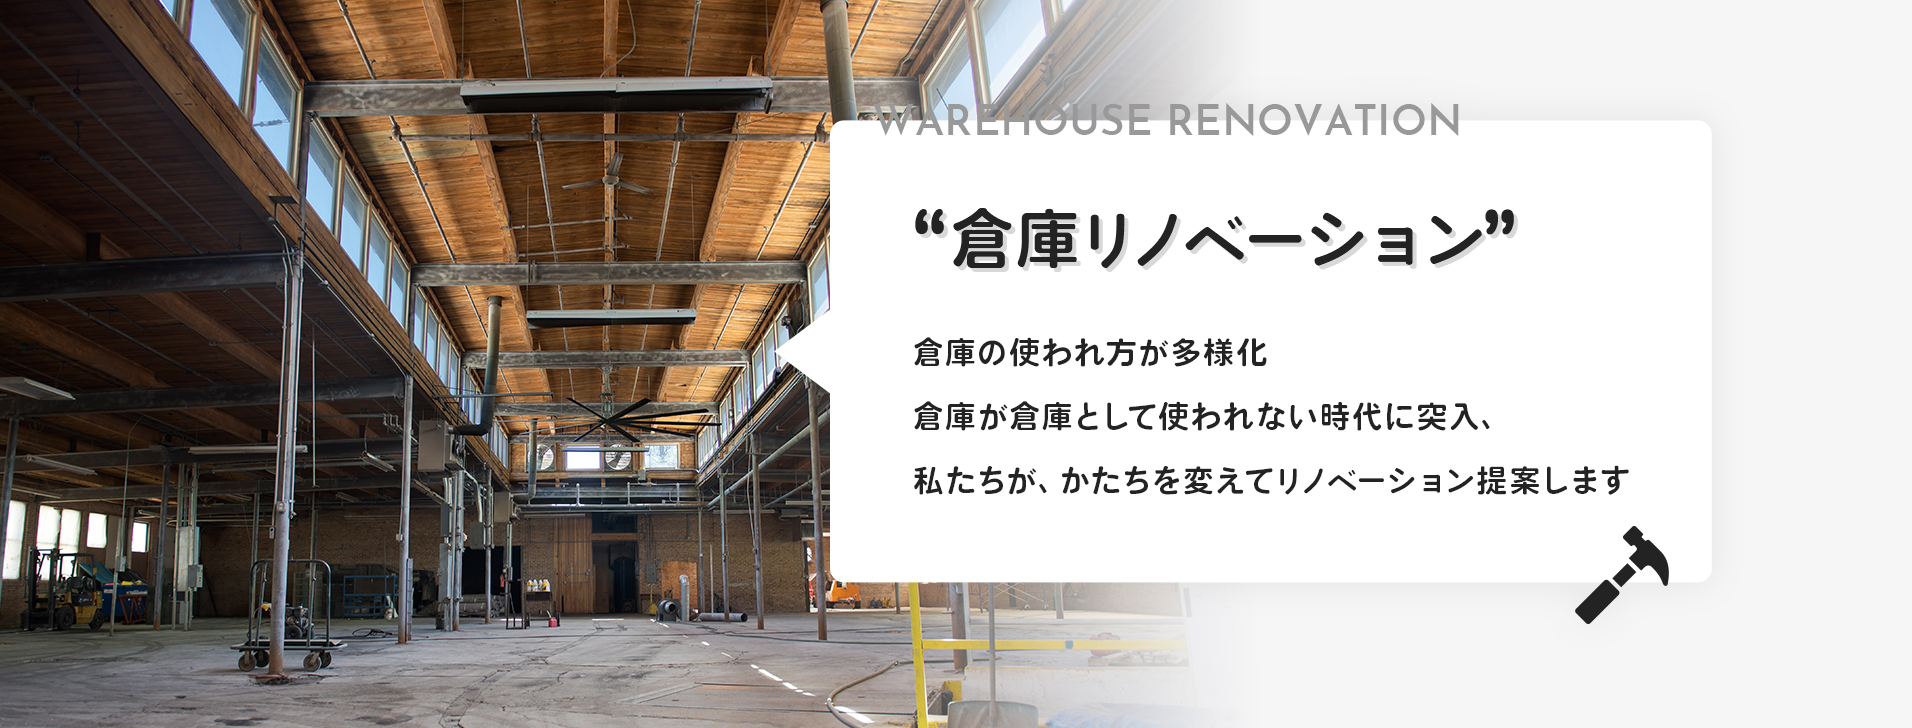 WAREHOUSE RENOVATION “倉庫リノベーション” 倉庫の使われ方が多様化 倉庫が倉庫として使われない時代に突入、私たちが、かたちを変えてリノベーション提案します